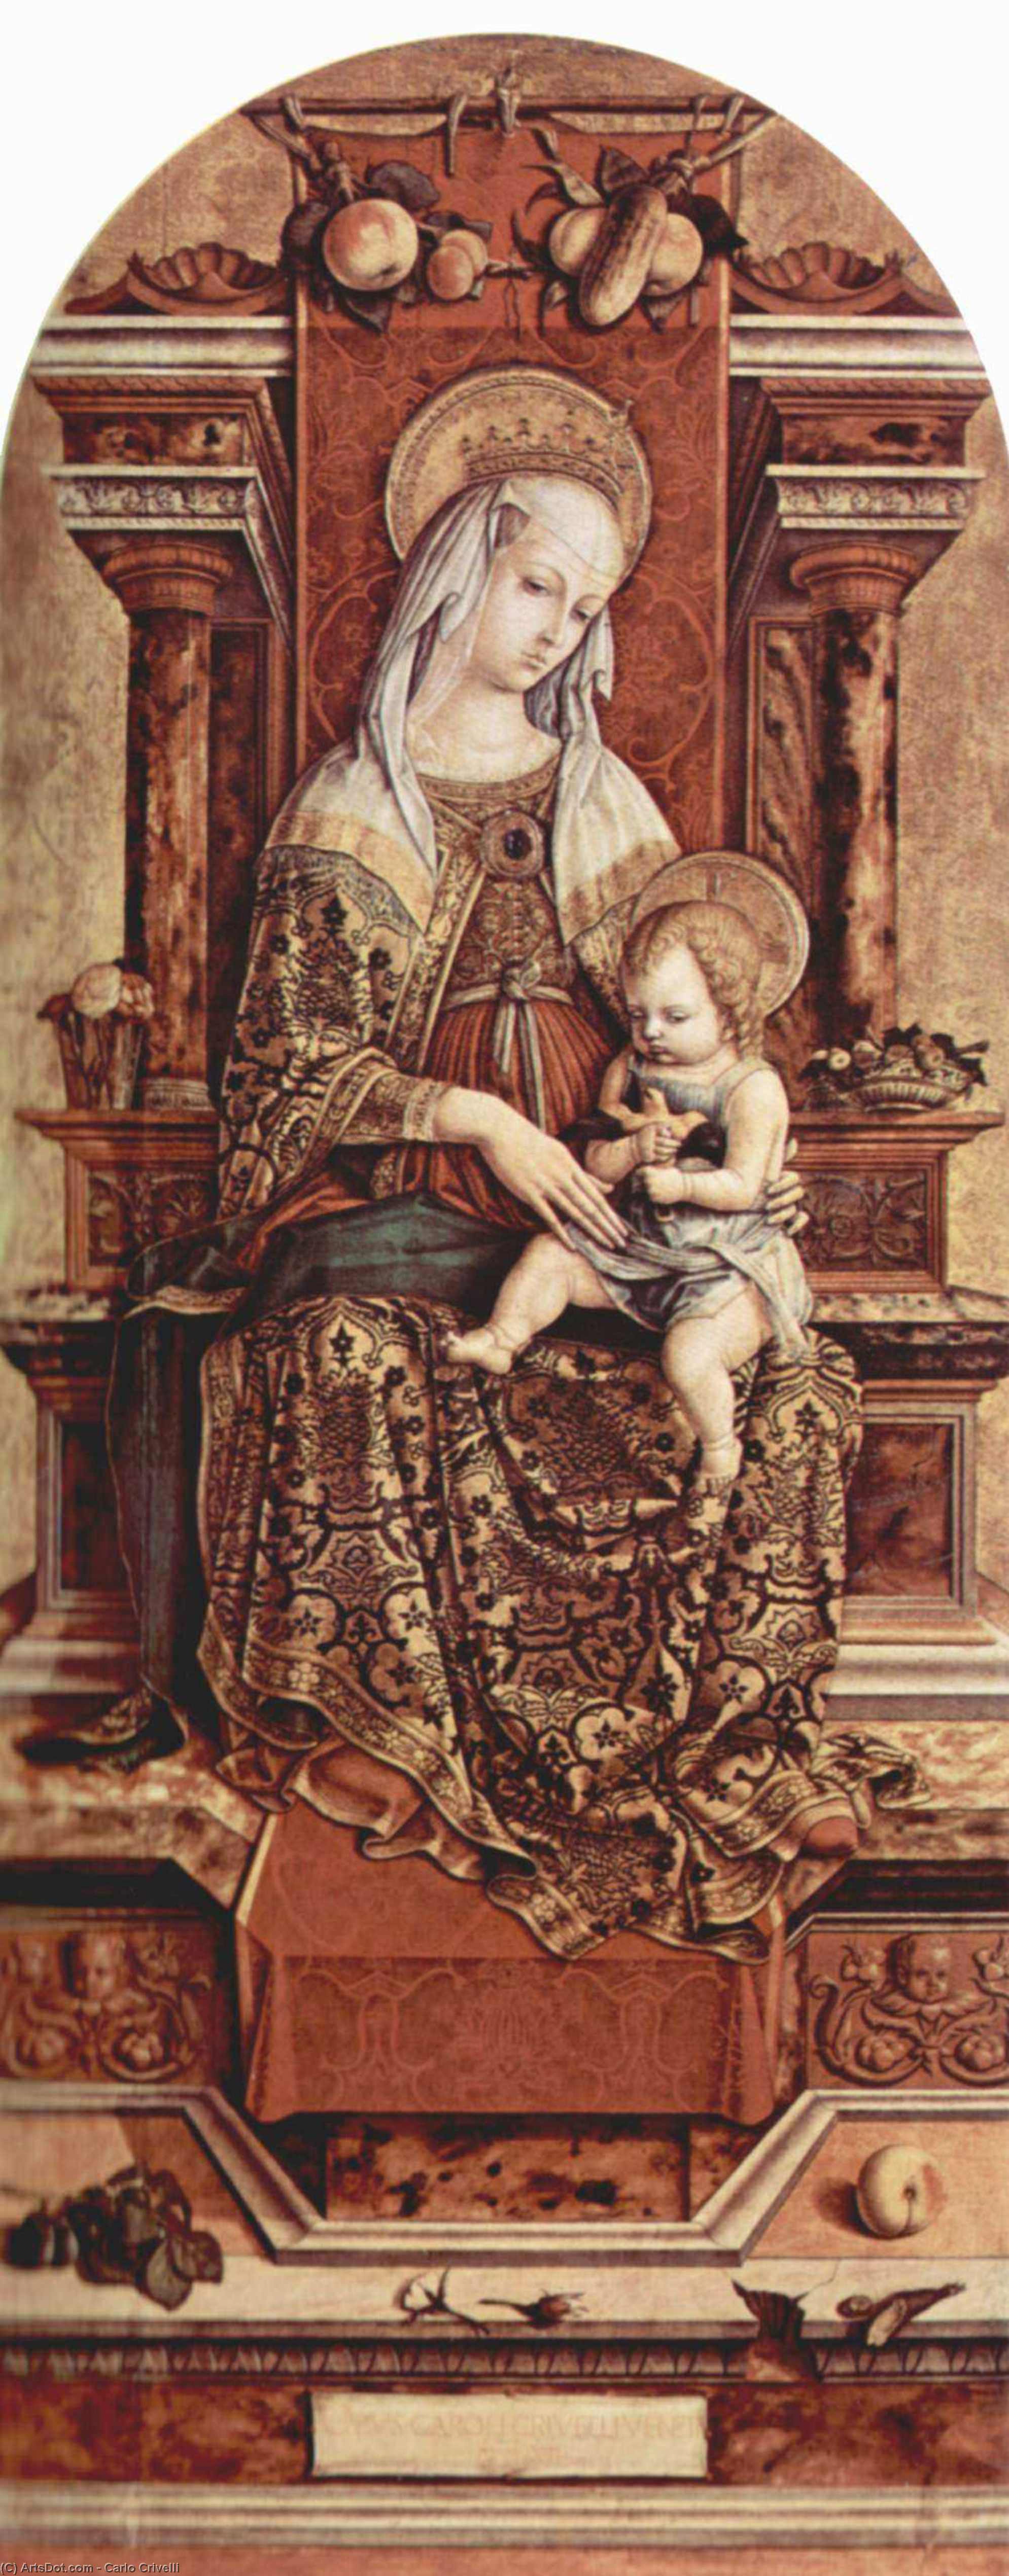 Автор картины мадонна с младенцем на троне. Карло Кривелли Мадонна с младенцем. Карло Кривелли Мадонна на троне. Карло Кривелли художник. Италия Карло Кривелли.